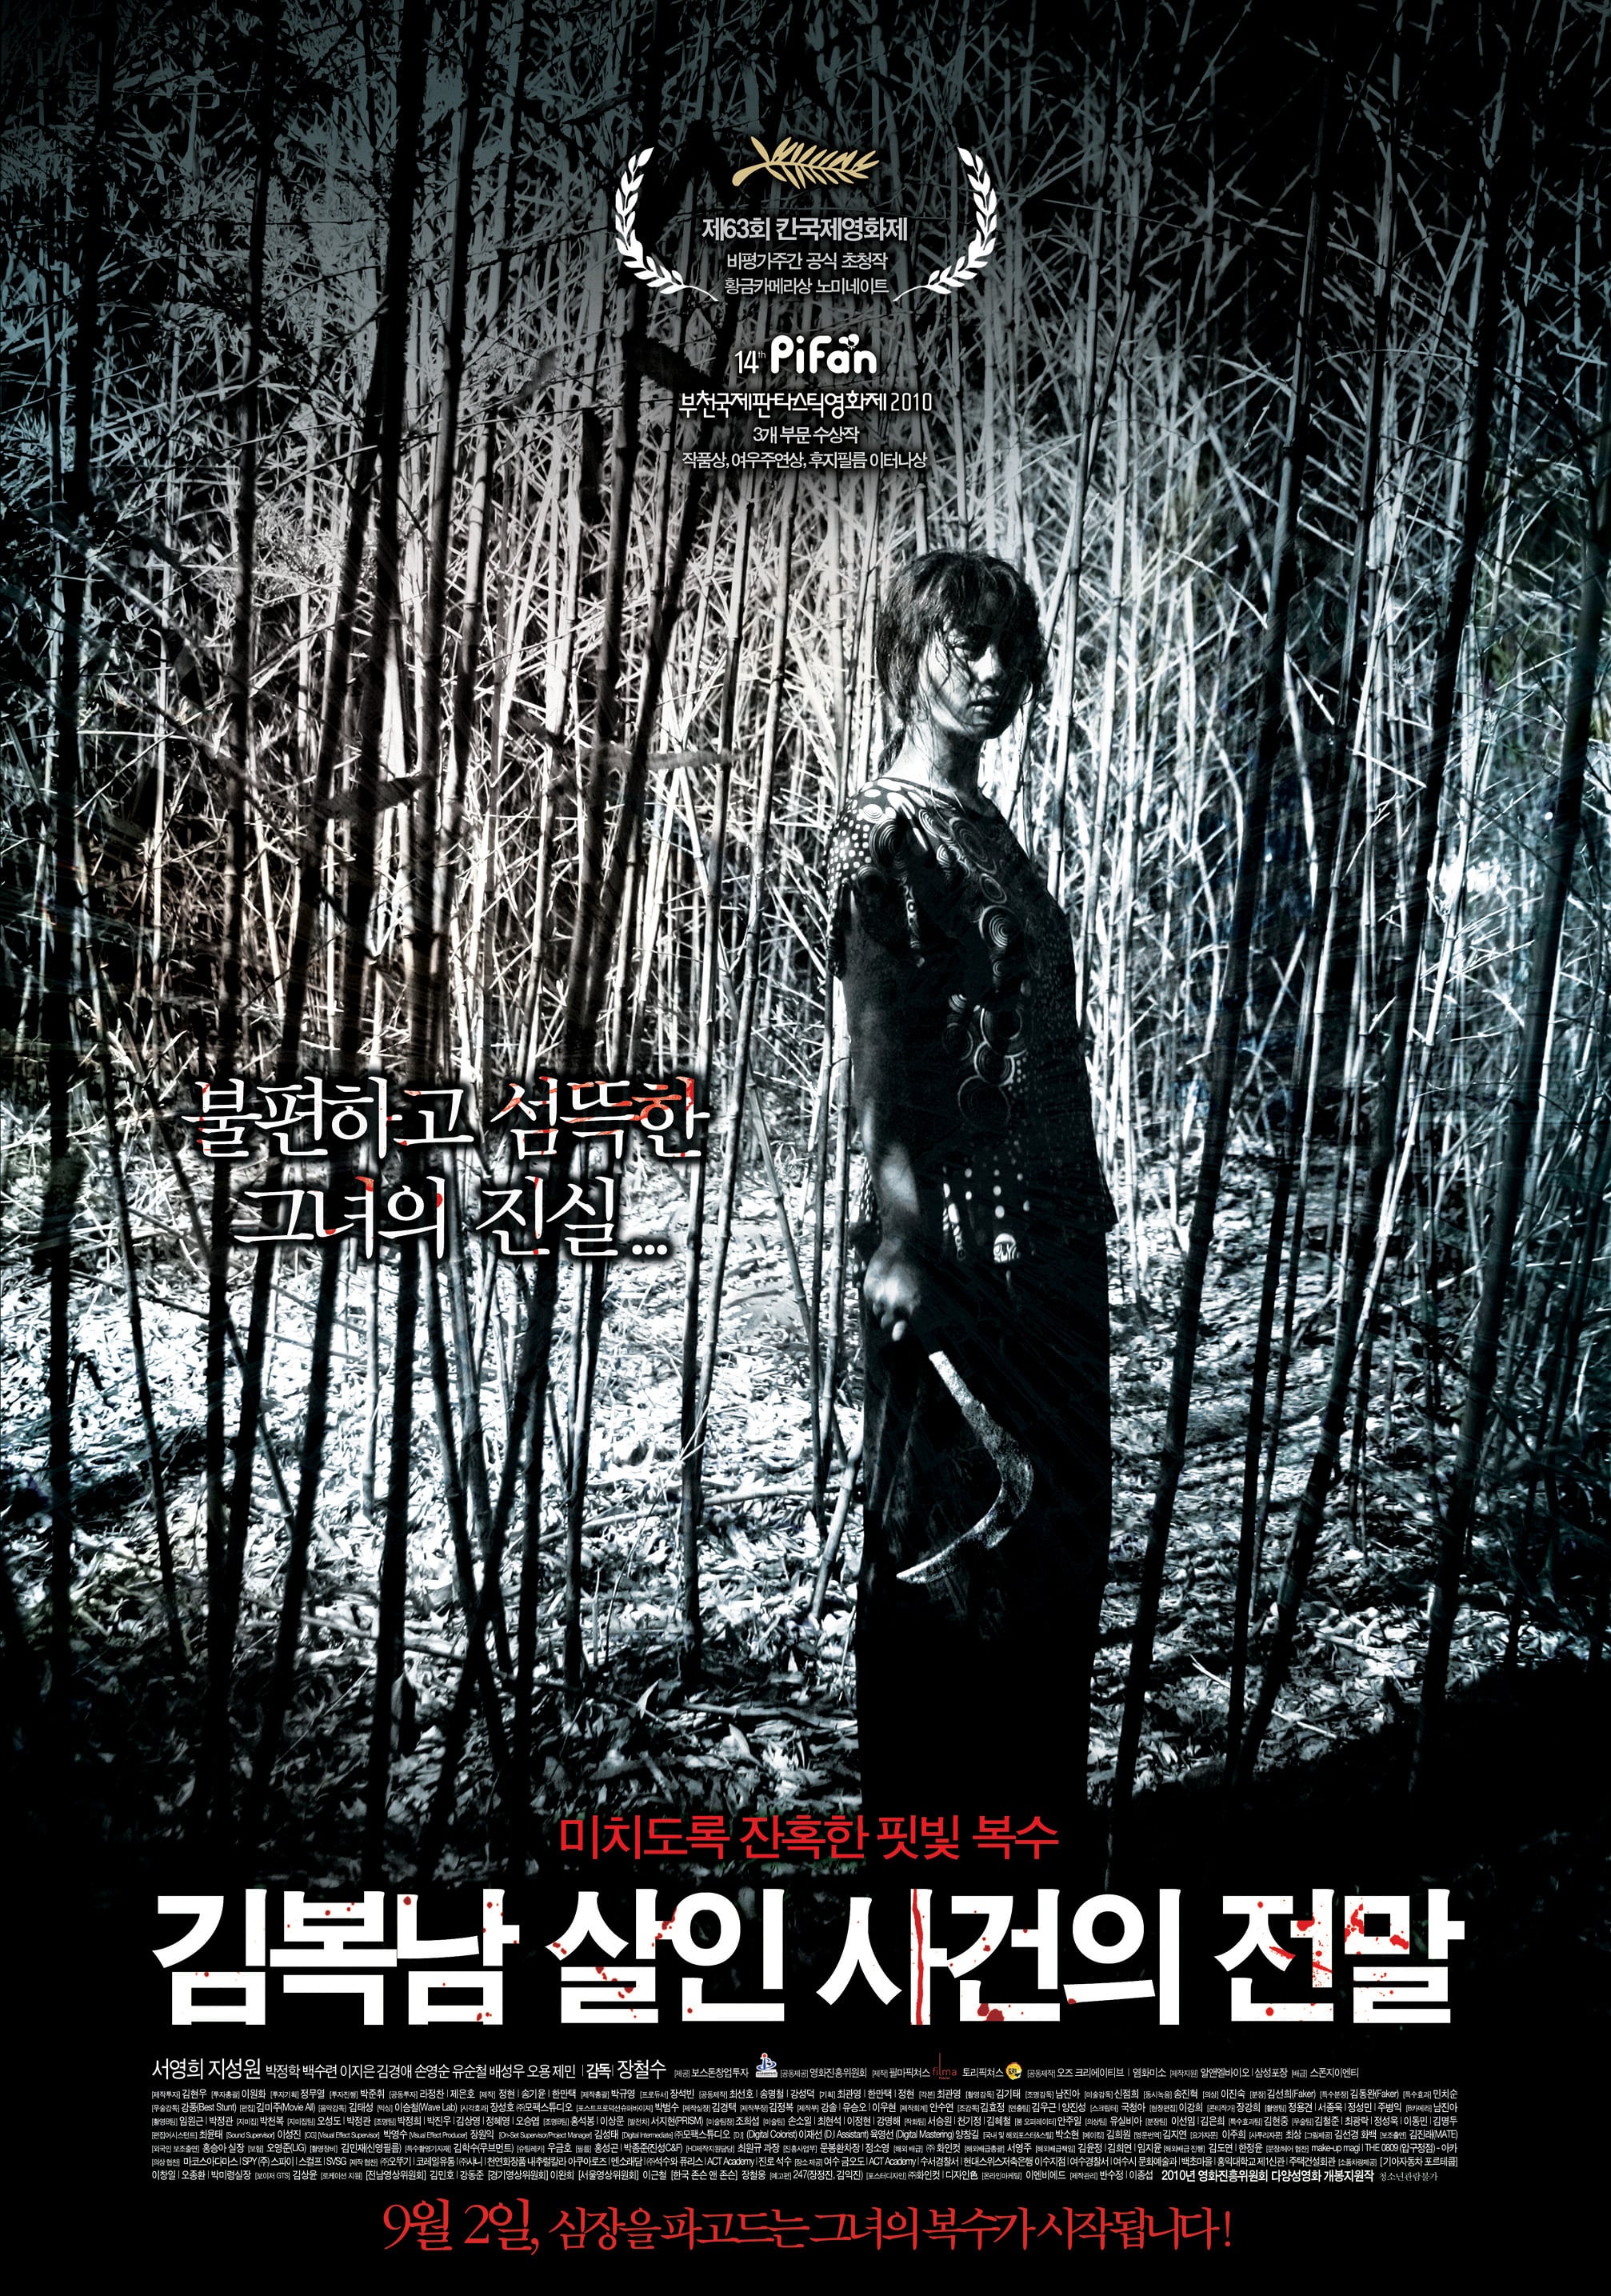 REVIEW) South Korean horror The Mimic builds on a Korean urban legend